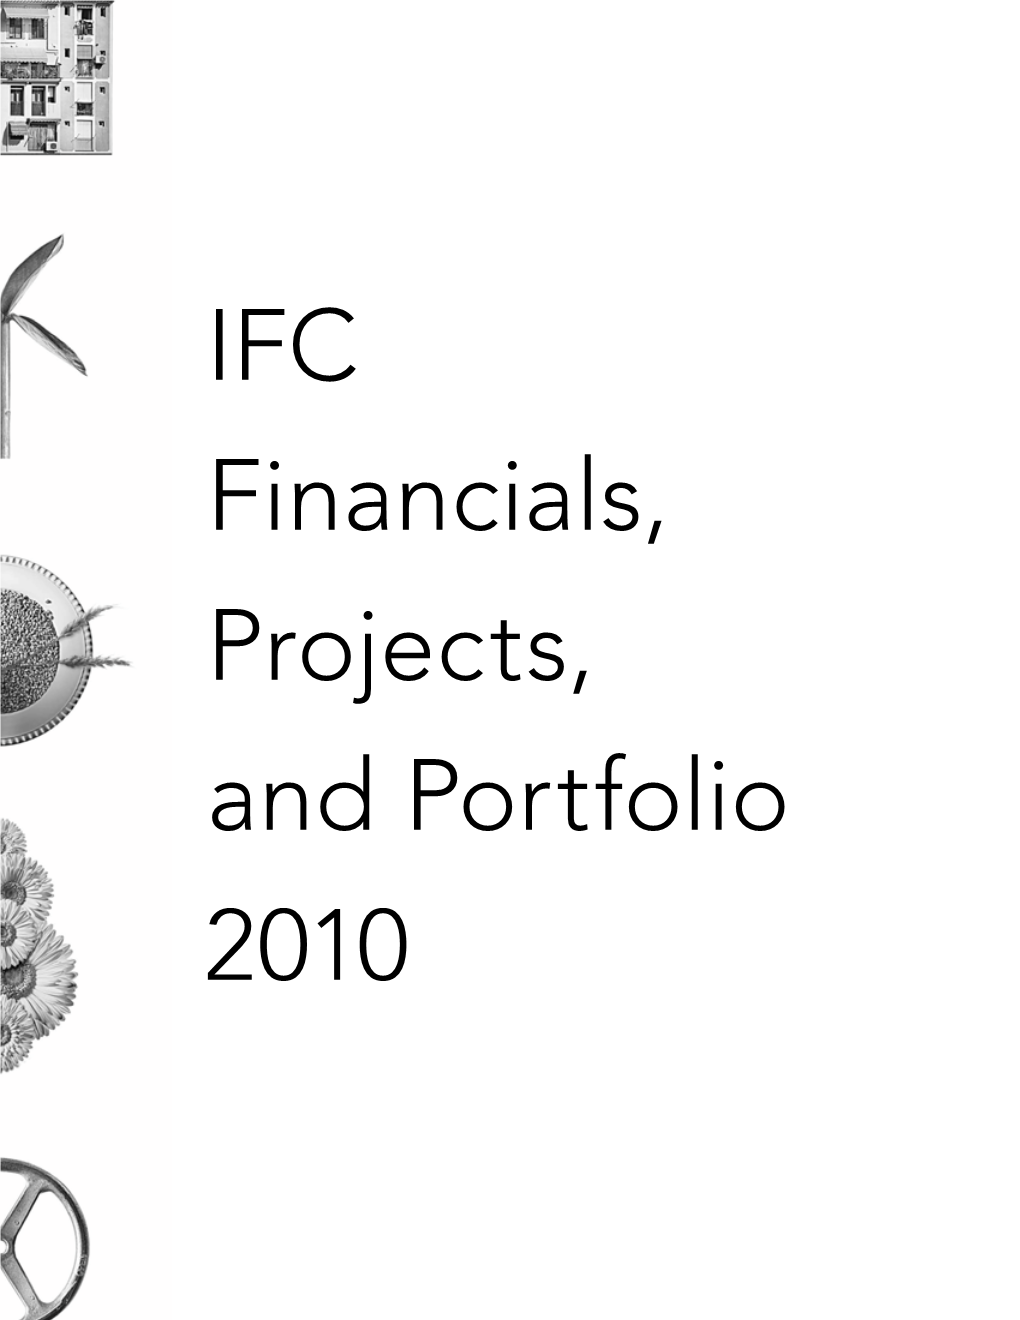 IFC Financials, Projects, and Portfolio 2010